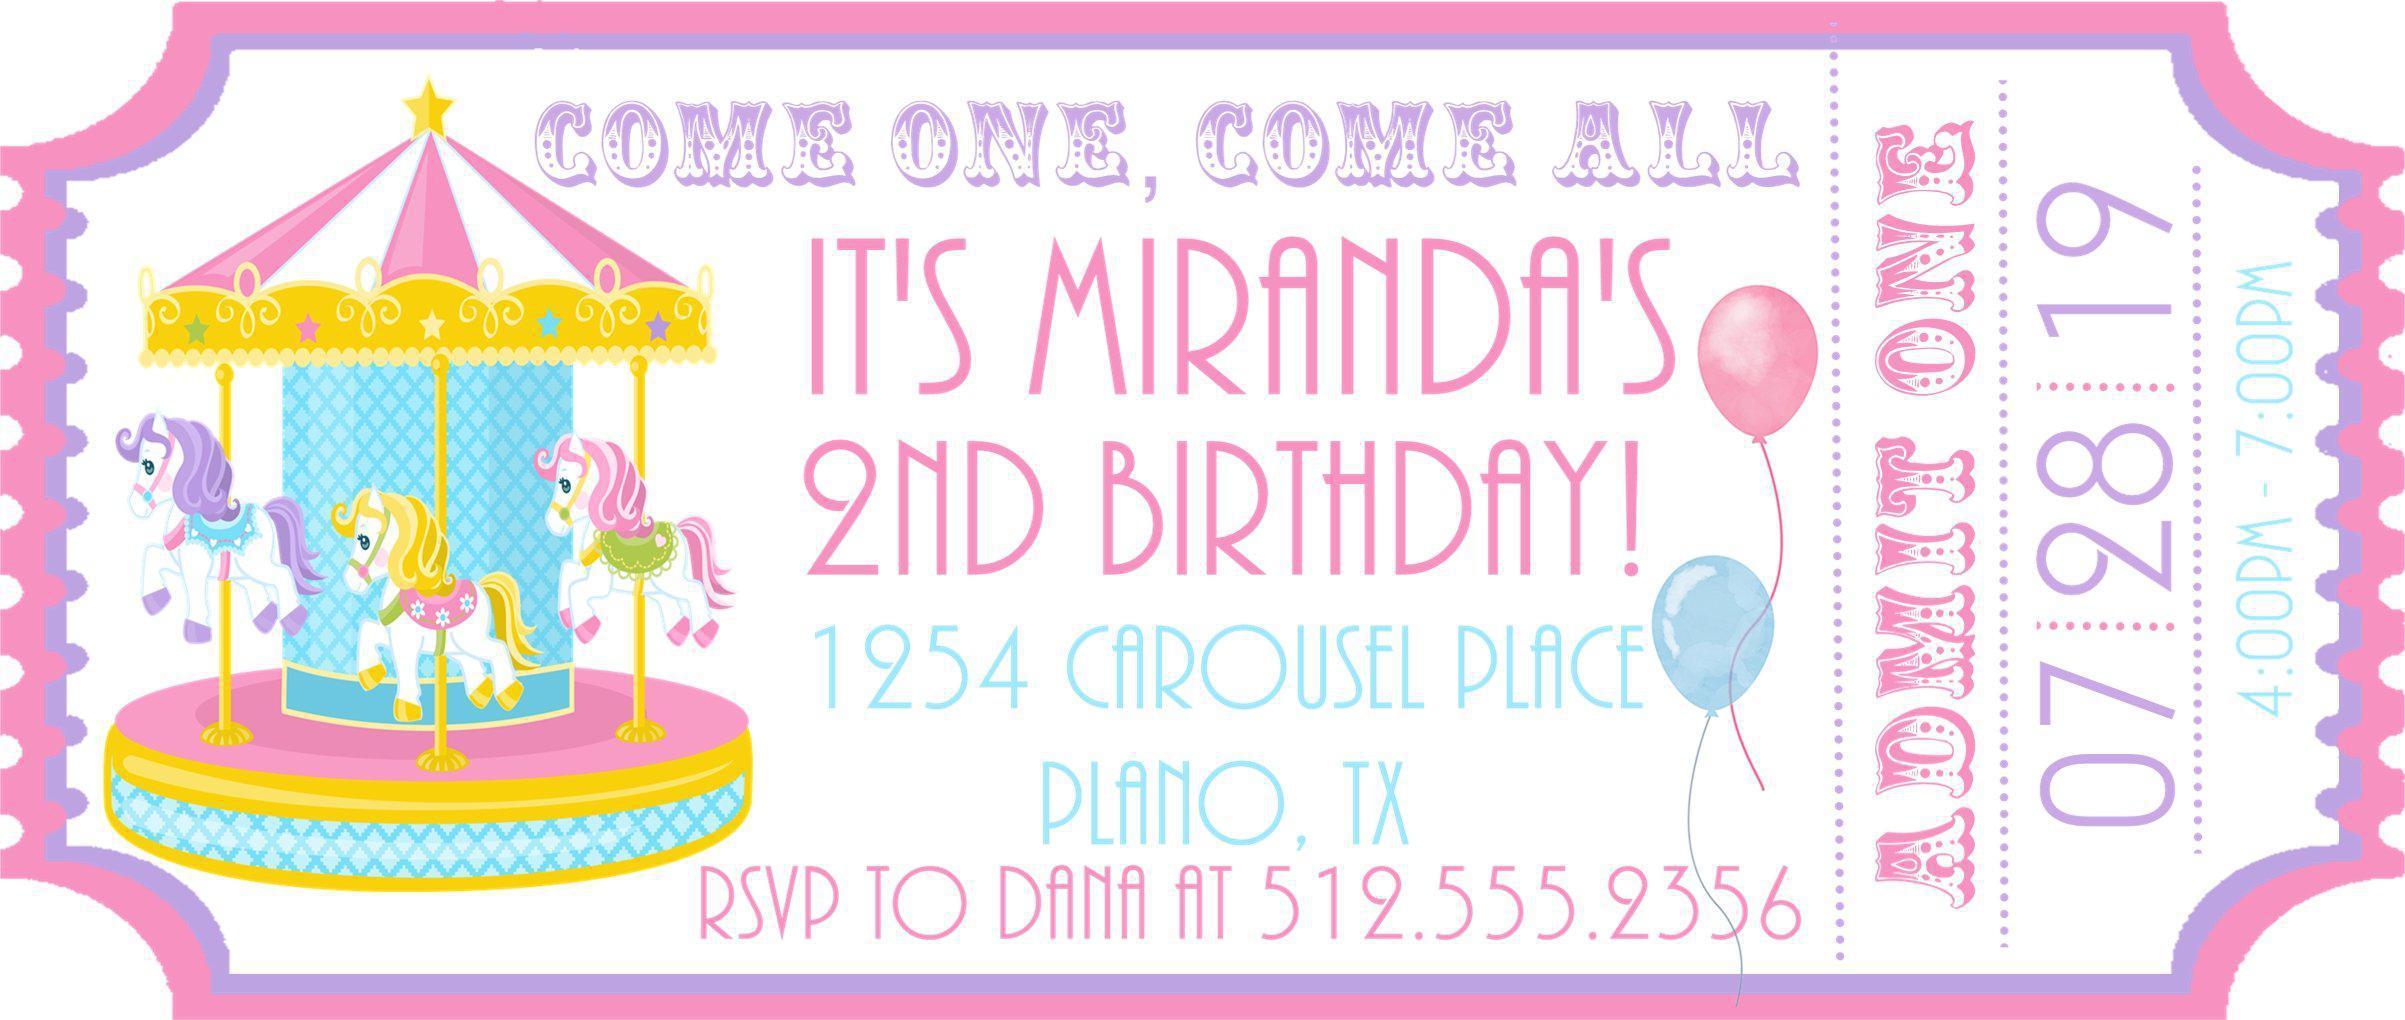 Circus Carousel Birthday Party Ticket Invitations